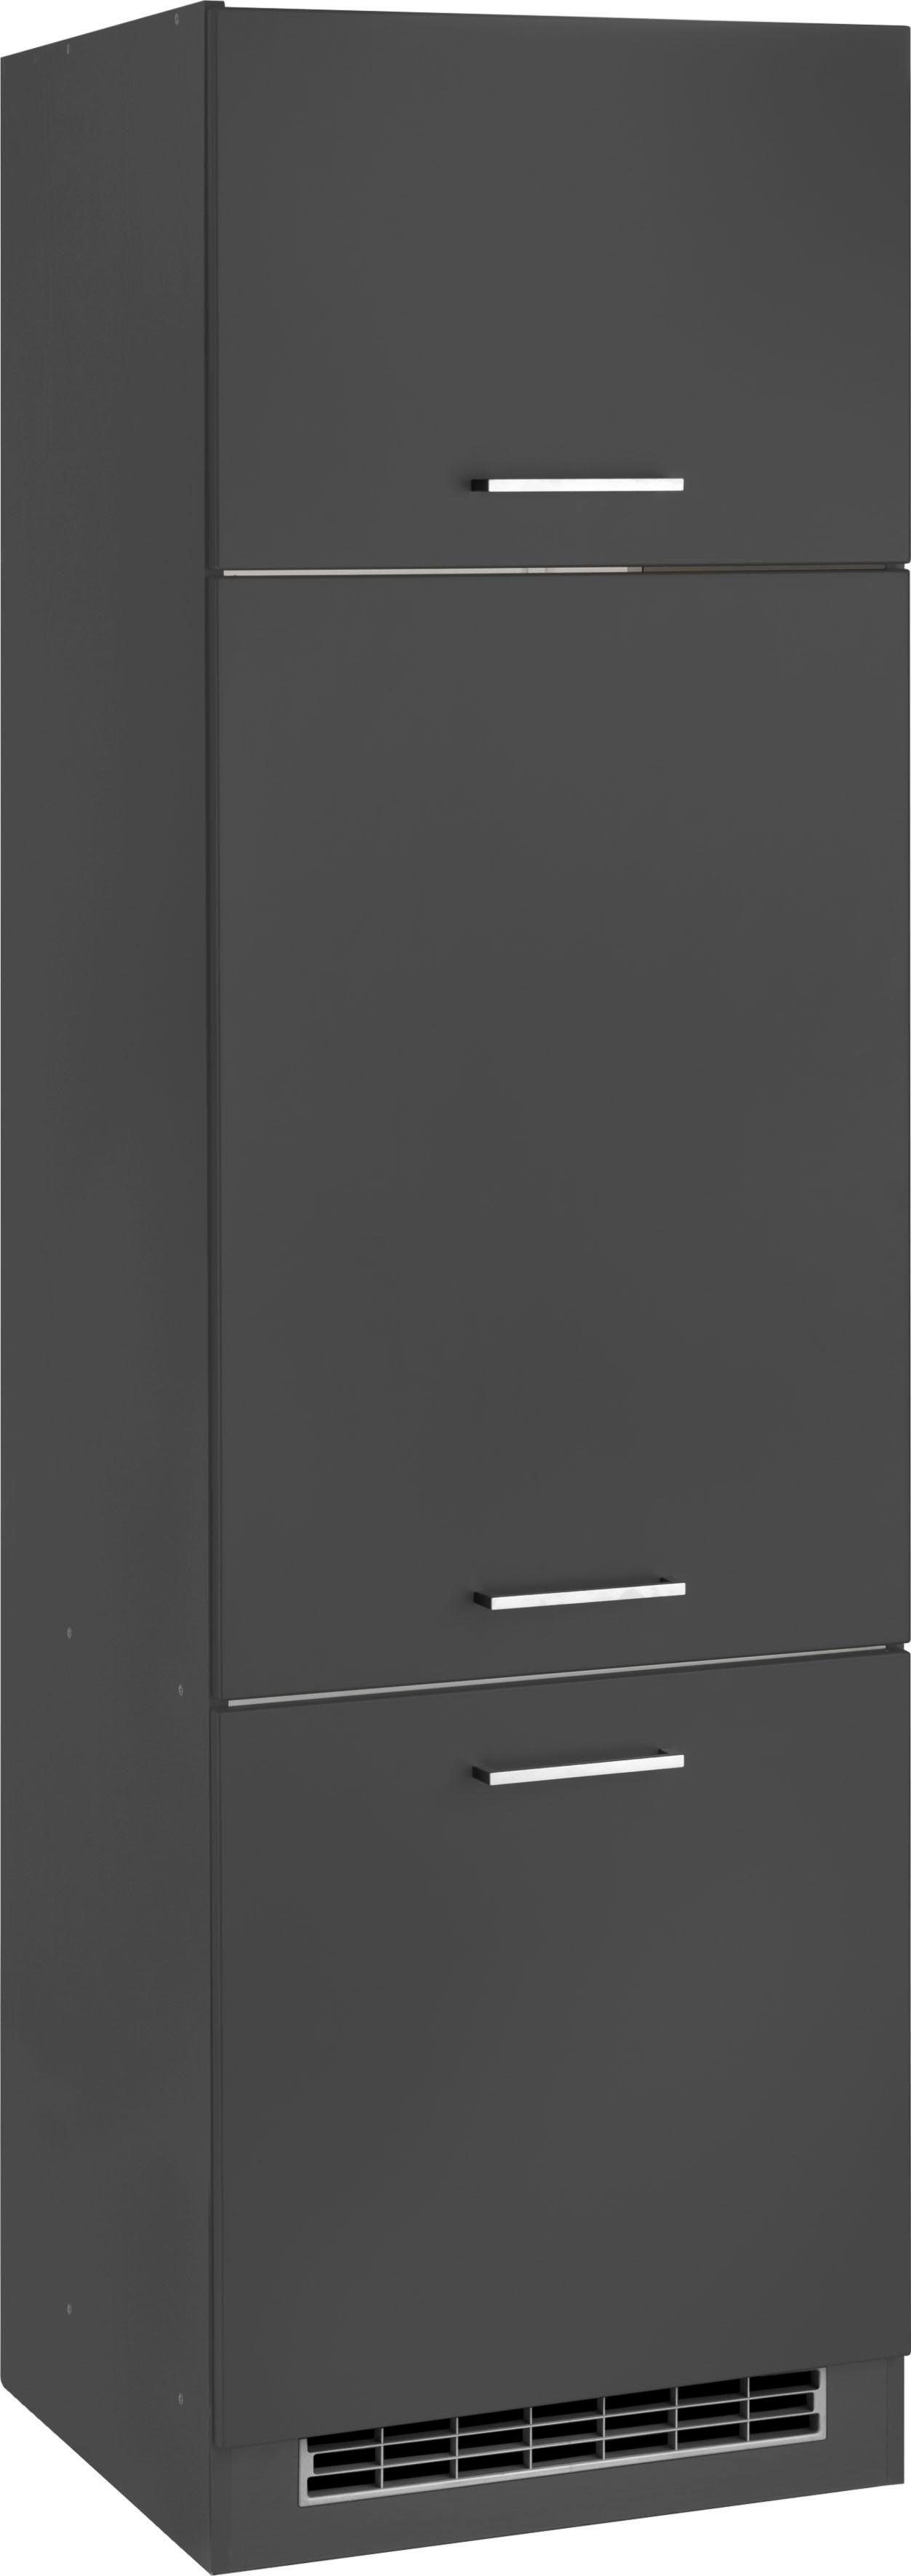 HELD MÖBEL Kühlumbauschrank Nischenhöhe 88cm Einbaukühlschrank, für grau | Kehl grafit